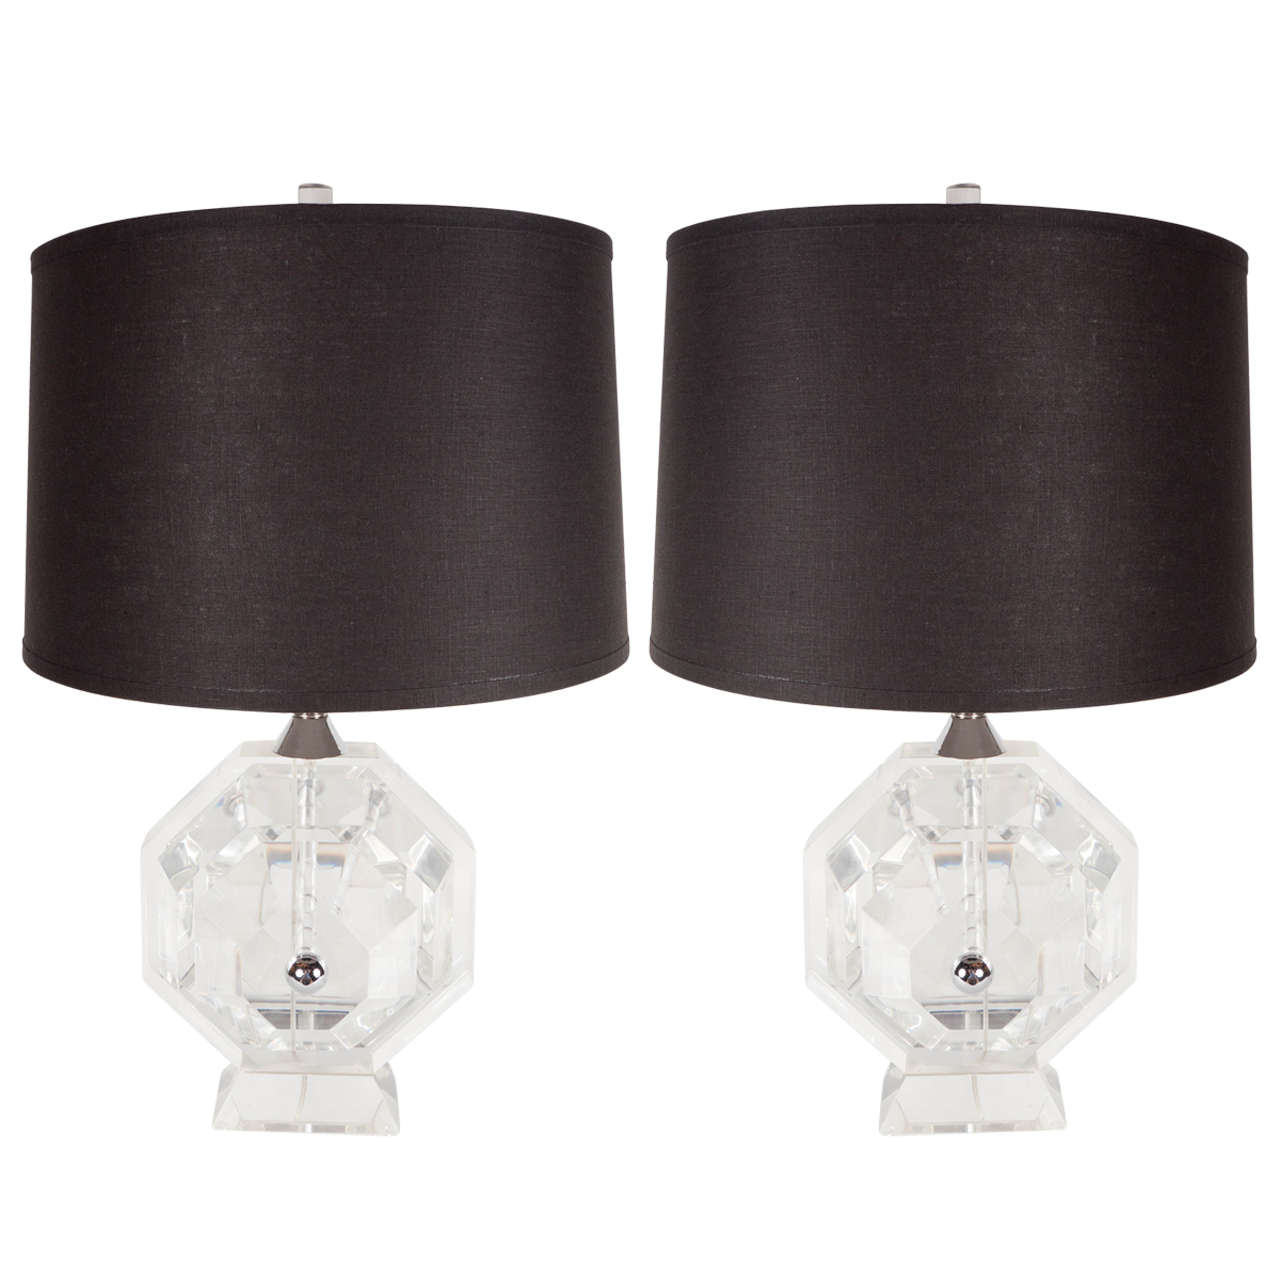 Magnificent Pair of Mid-Century Modernist Lucite Table Lamps by Prismatiques